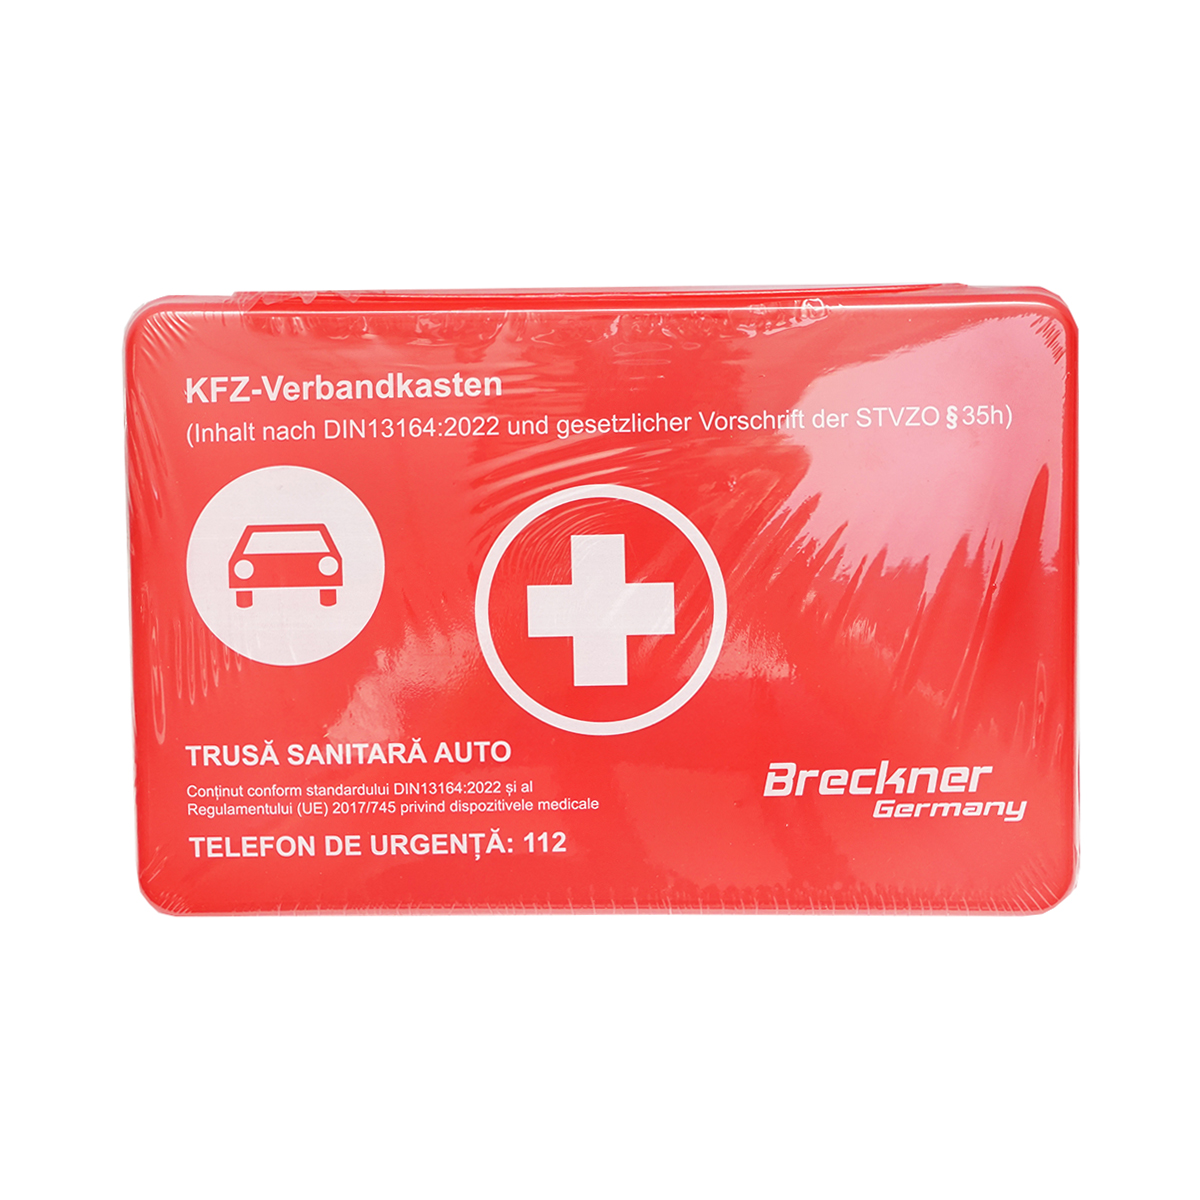 Trusa sanitara auto de prim ajutor, Breckner Germany